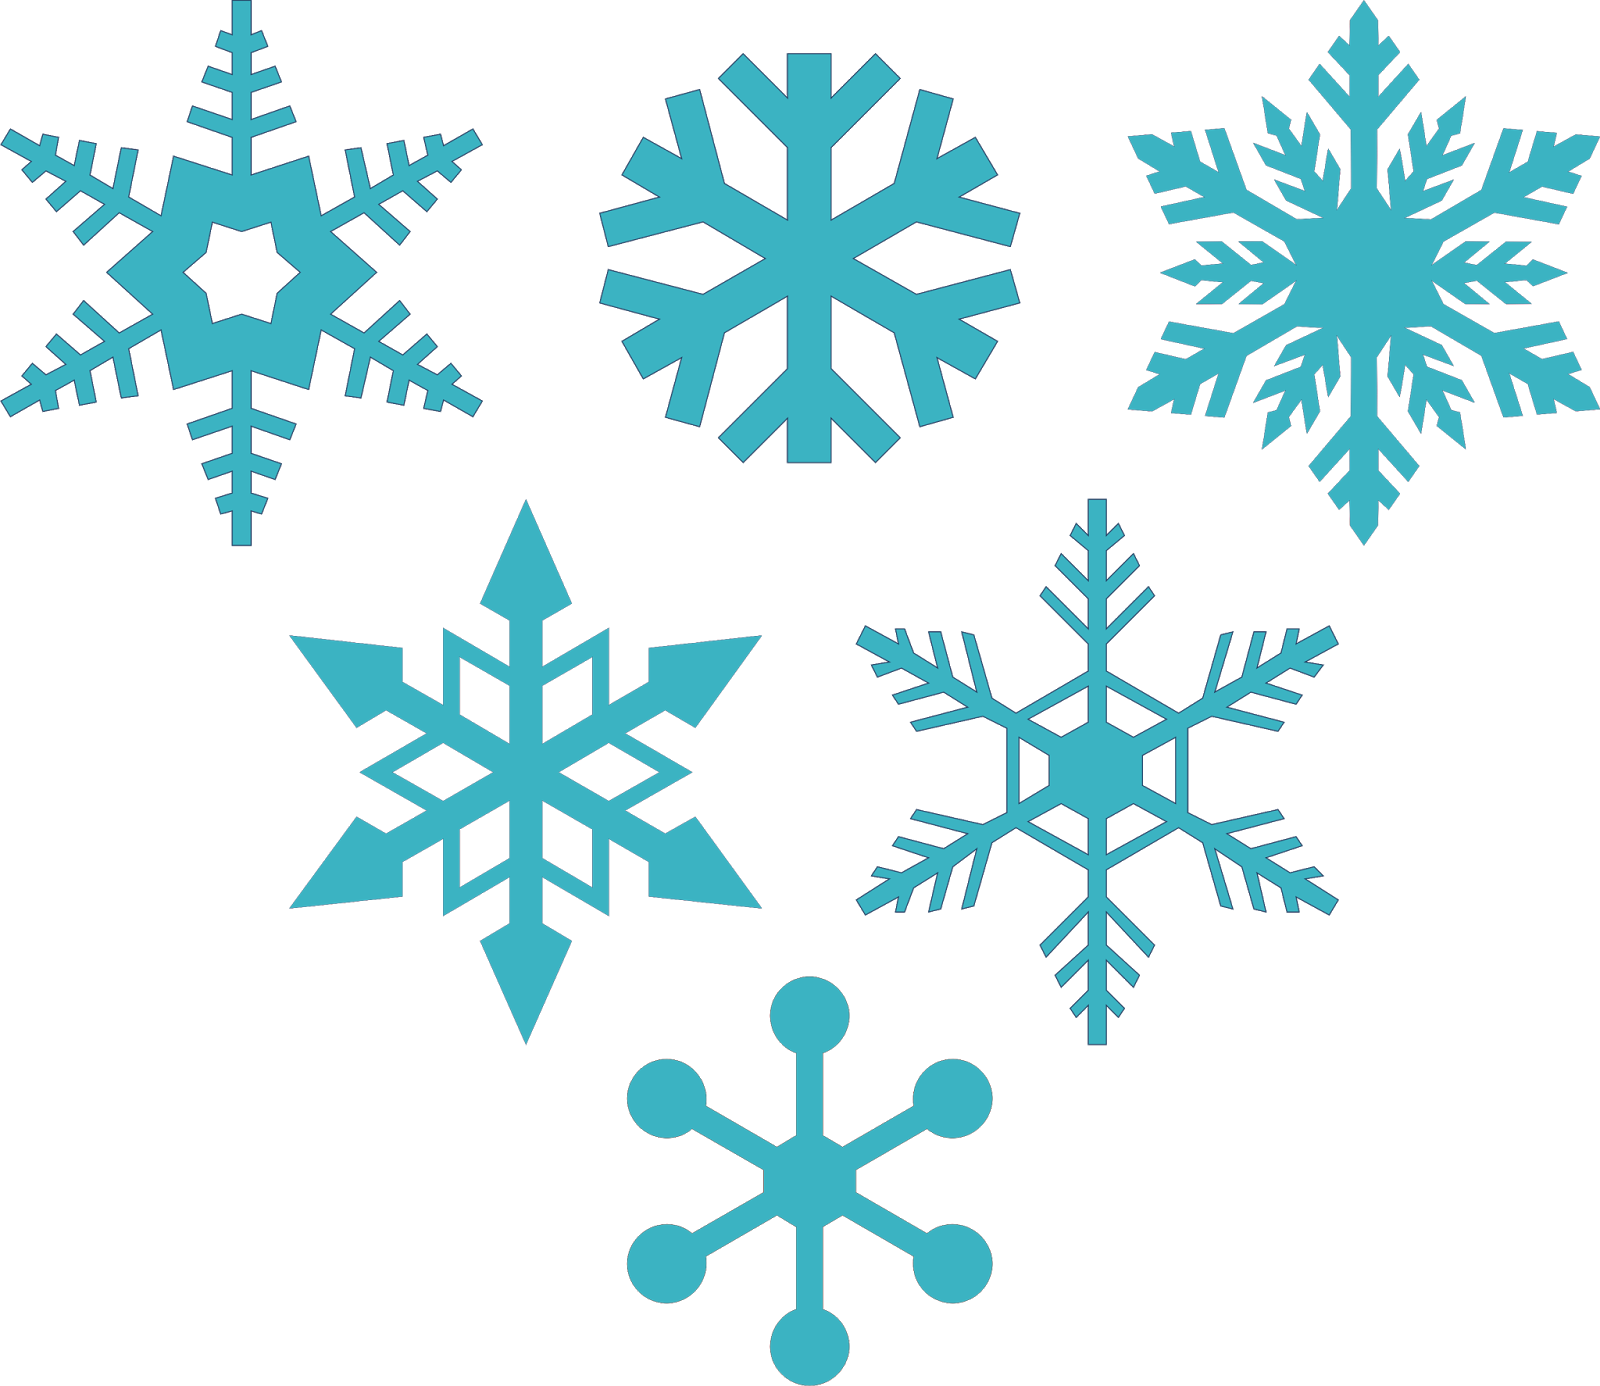 Download DIGITAL ART by Daniela Angelova: 6 free snowflakes